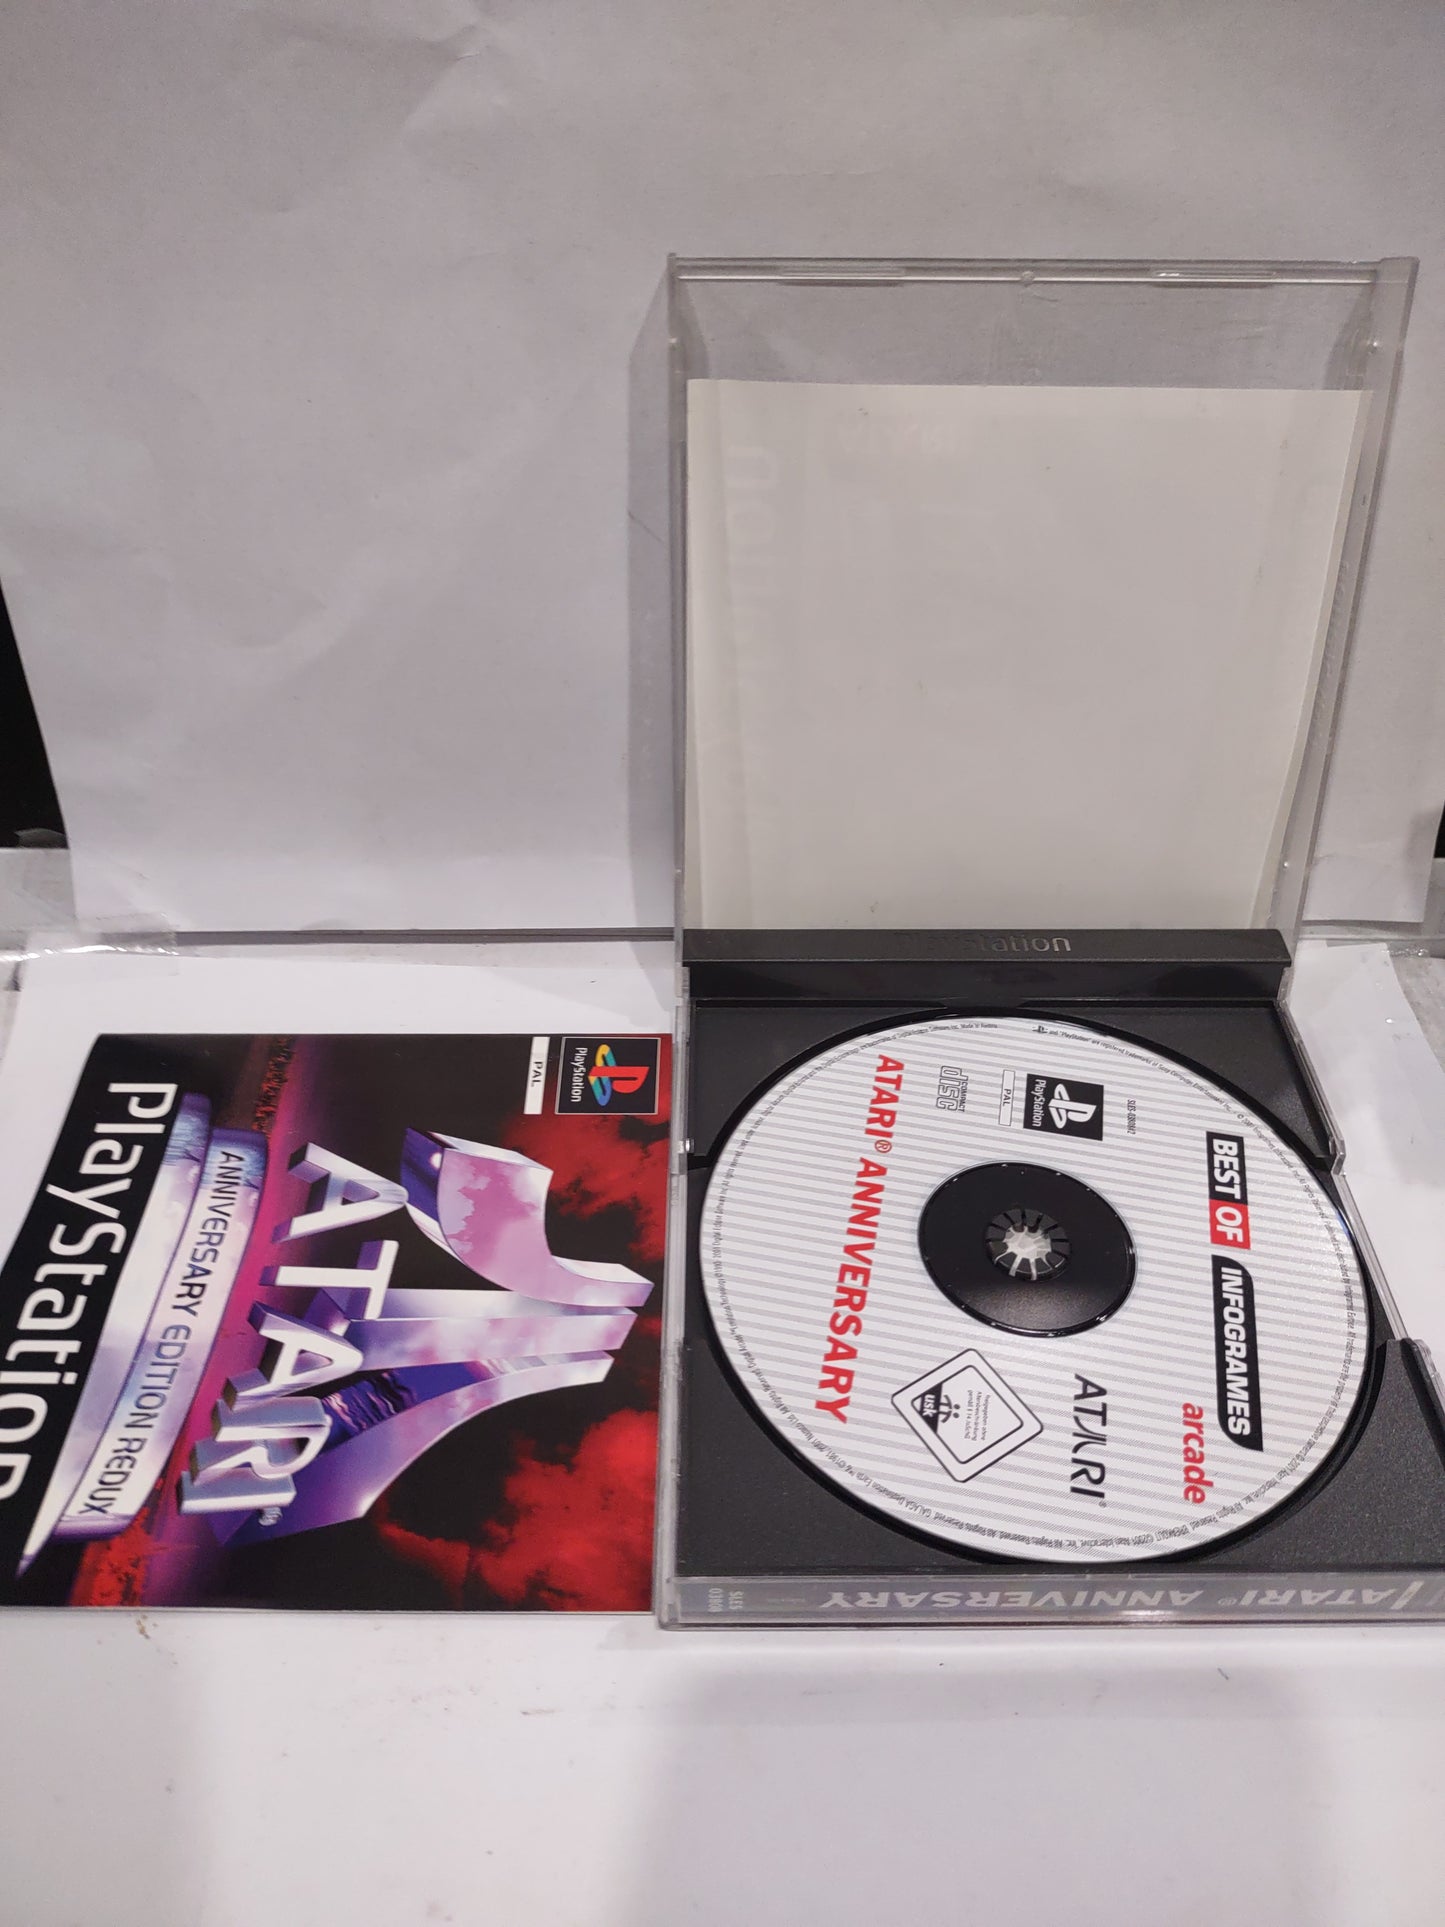 Gioco PlayStation PS1 Atari anniversary edition redux best of